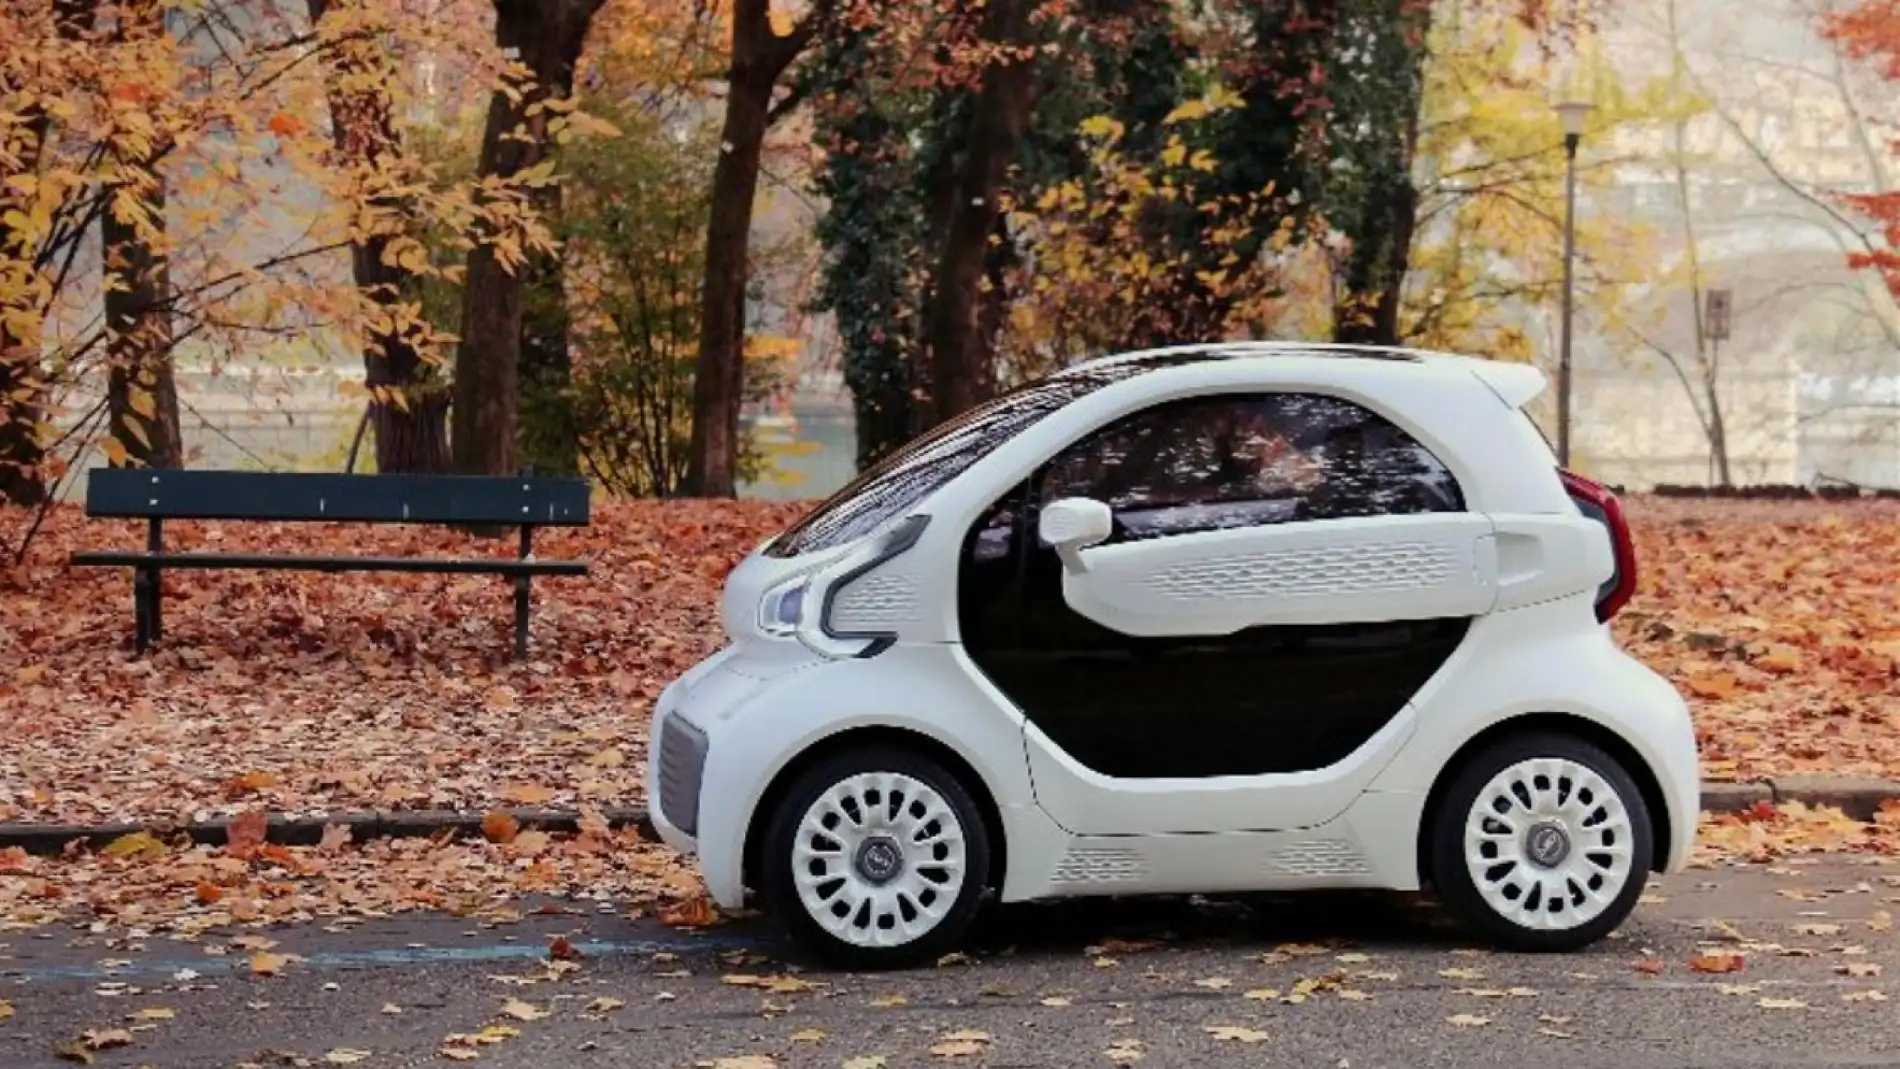 LSEV: un coche impreso en 3D...¡por menos de 9.000 euros!